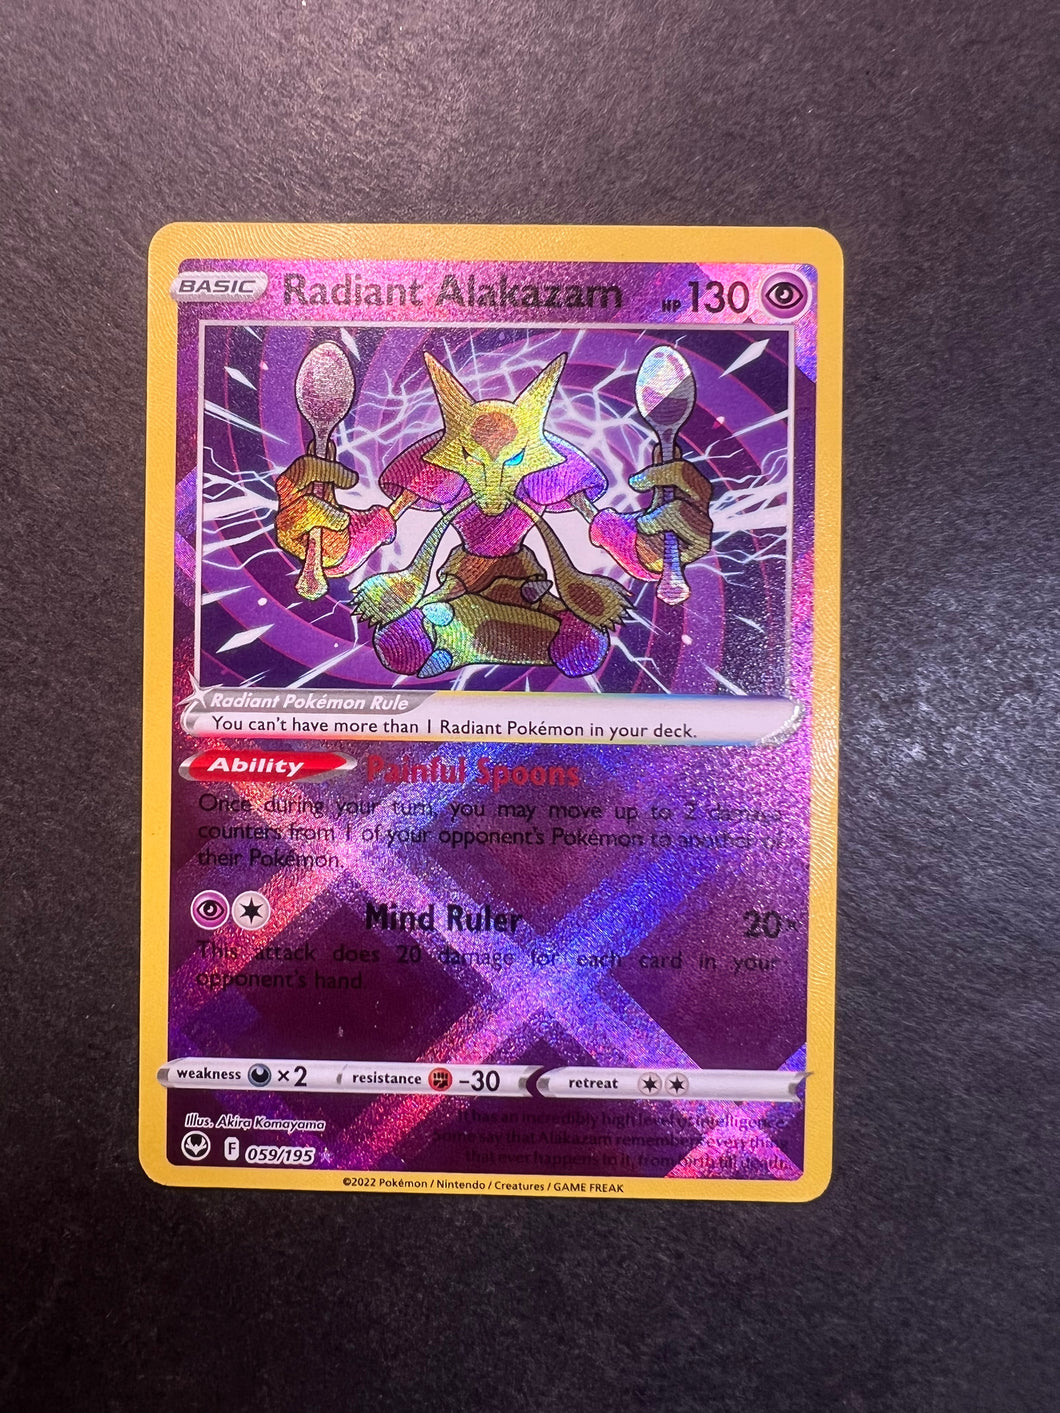 Radiant Alakazam 059/195 Pokemon Holo 2022 Silver Tempest